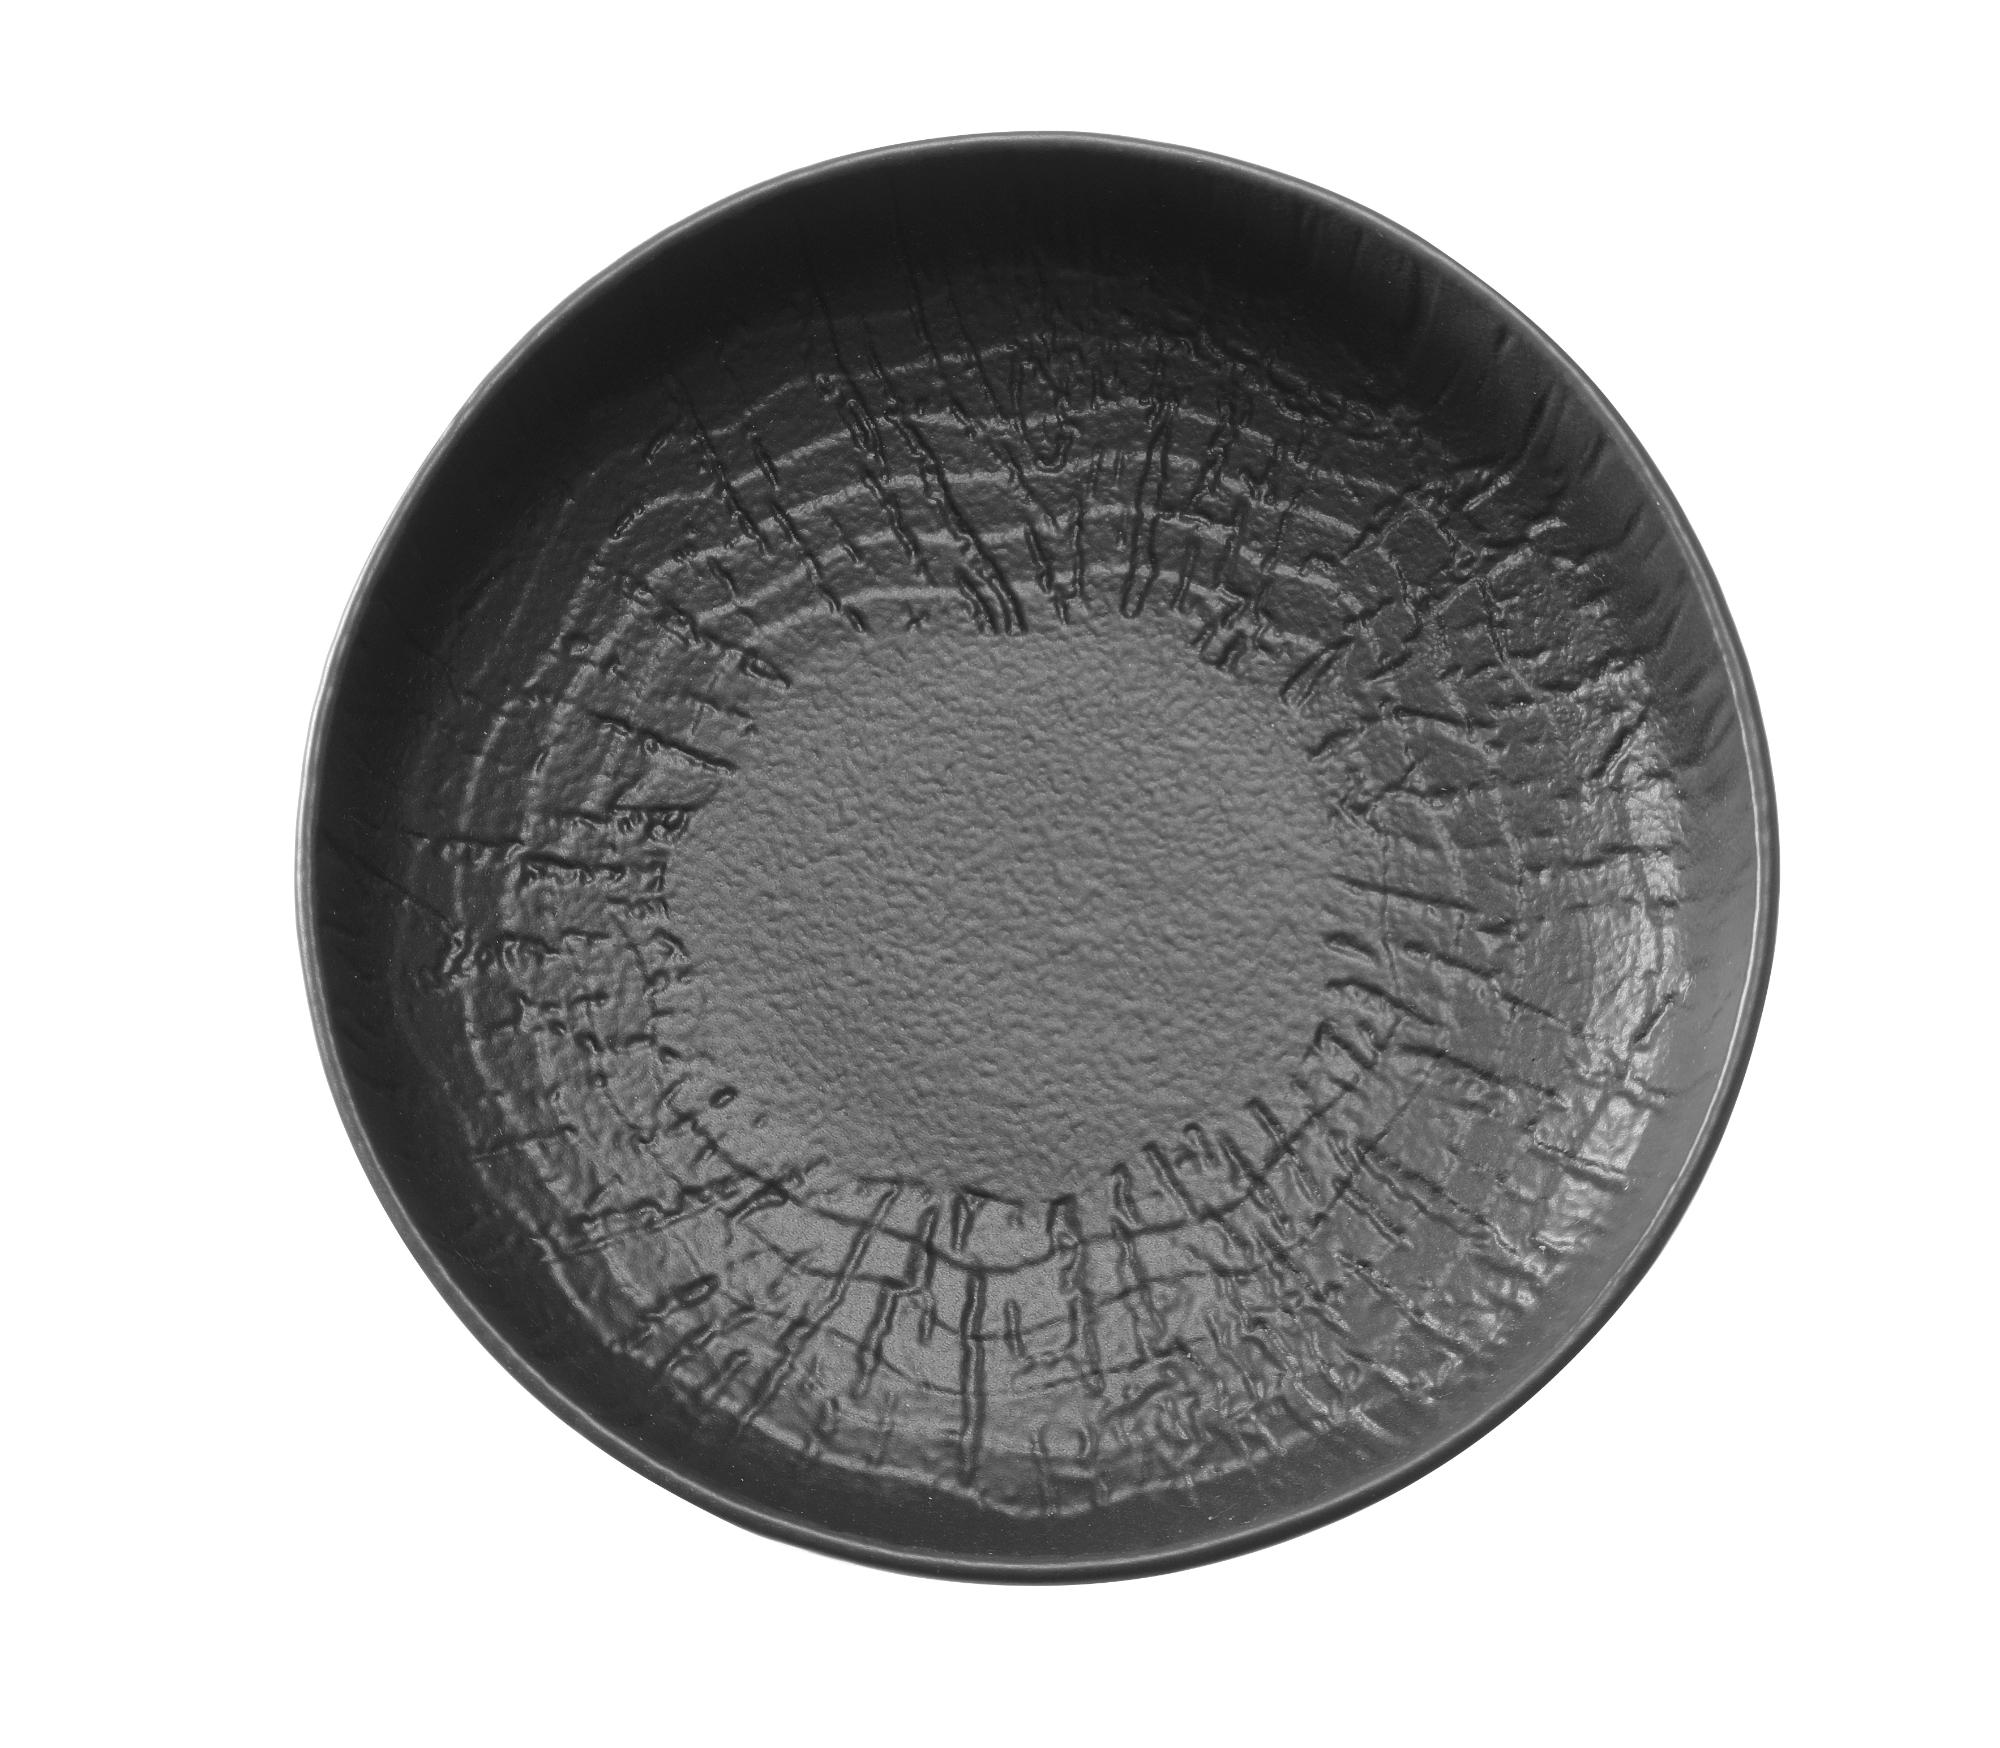 Crust shallow bowl, 200mm